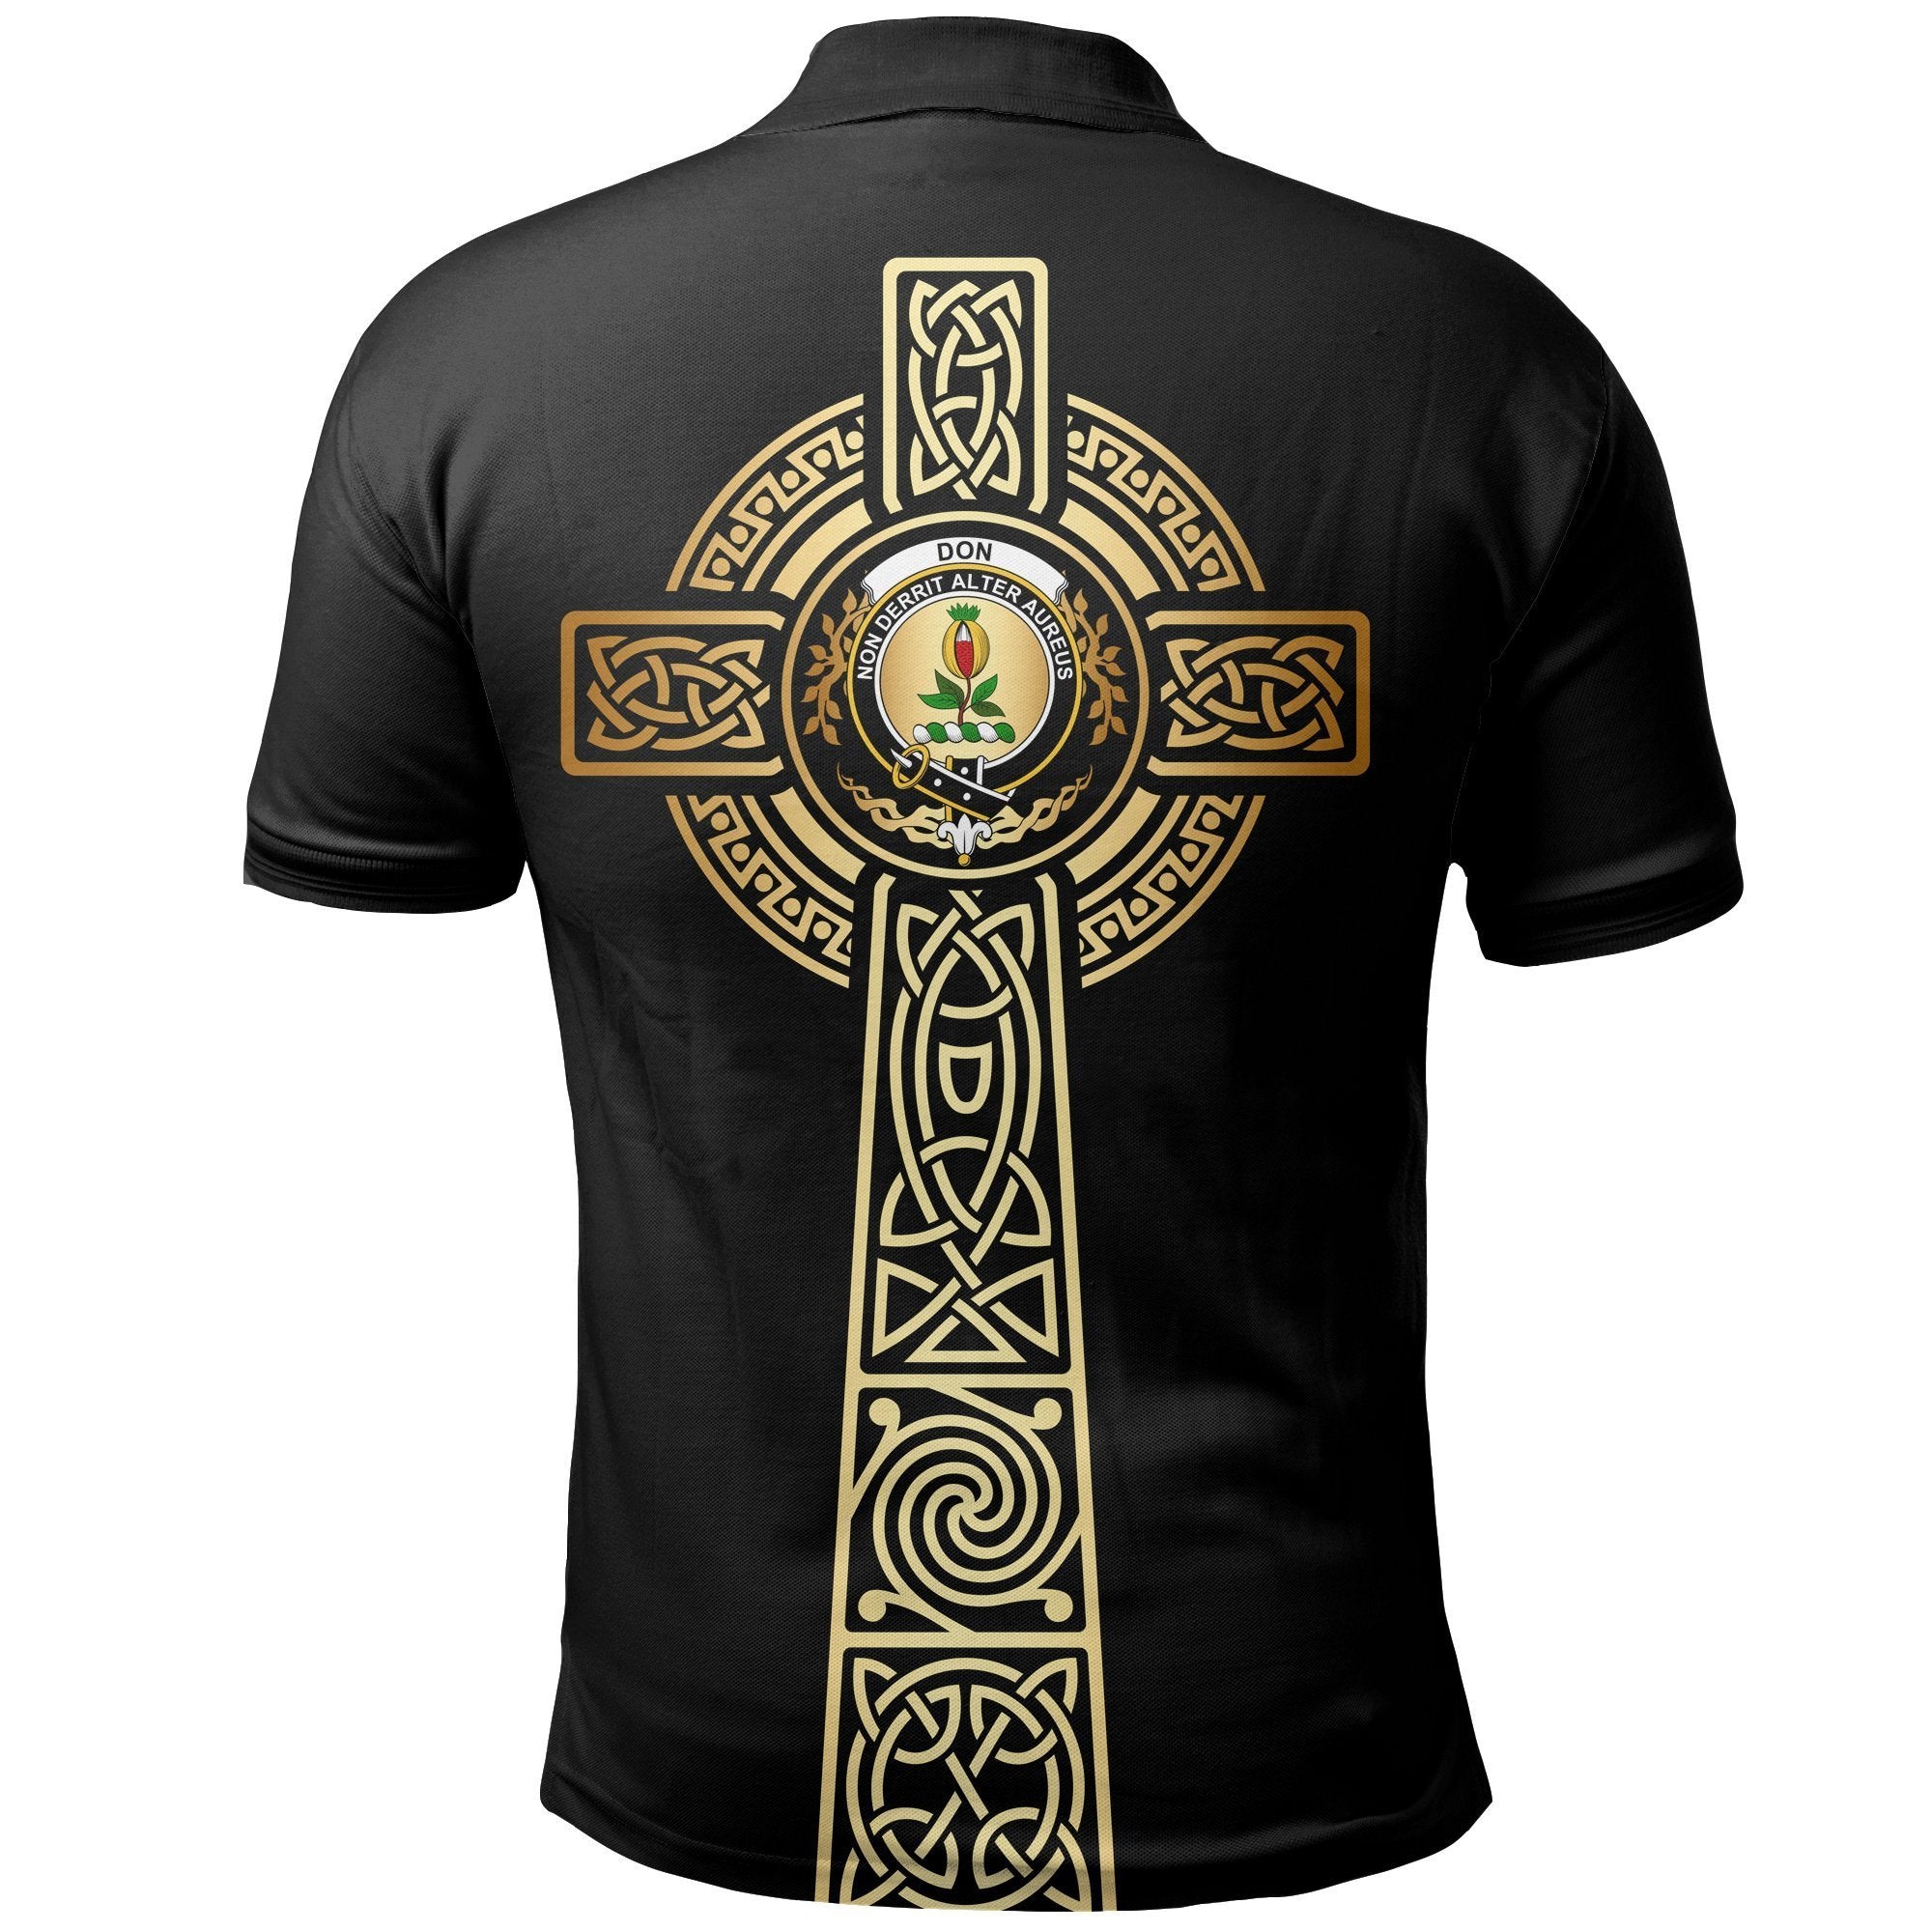 Don Clan Unisex Polo Shirt - Celtic Tree Of Life